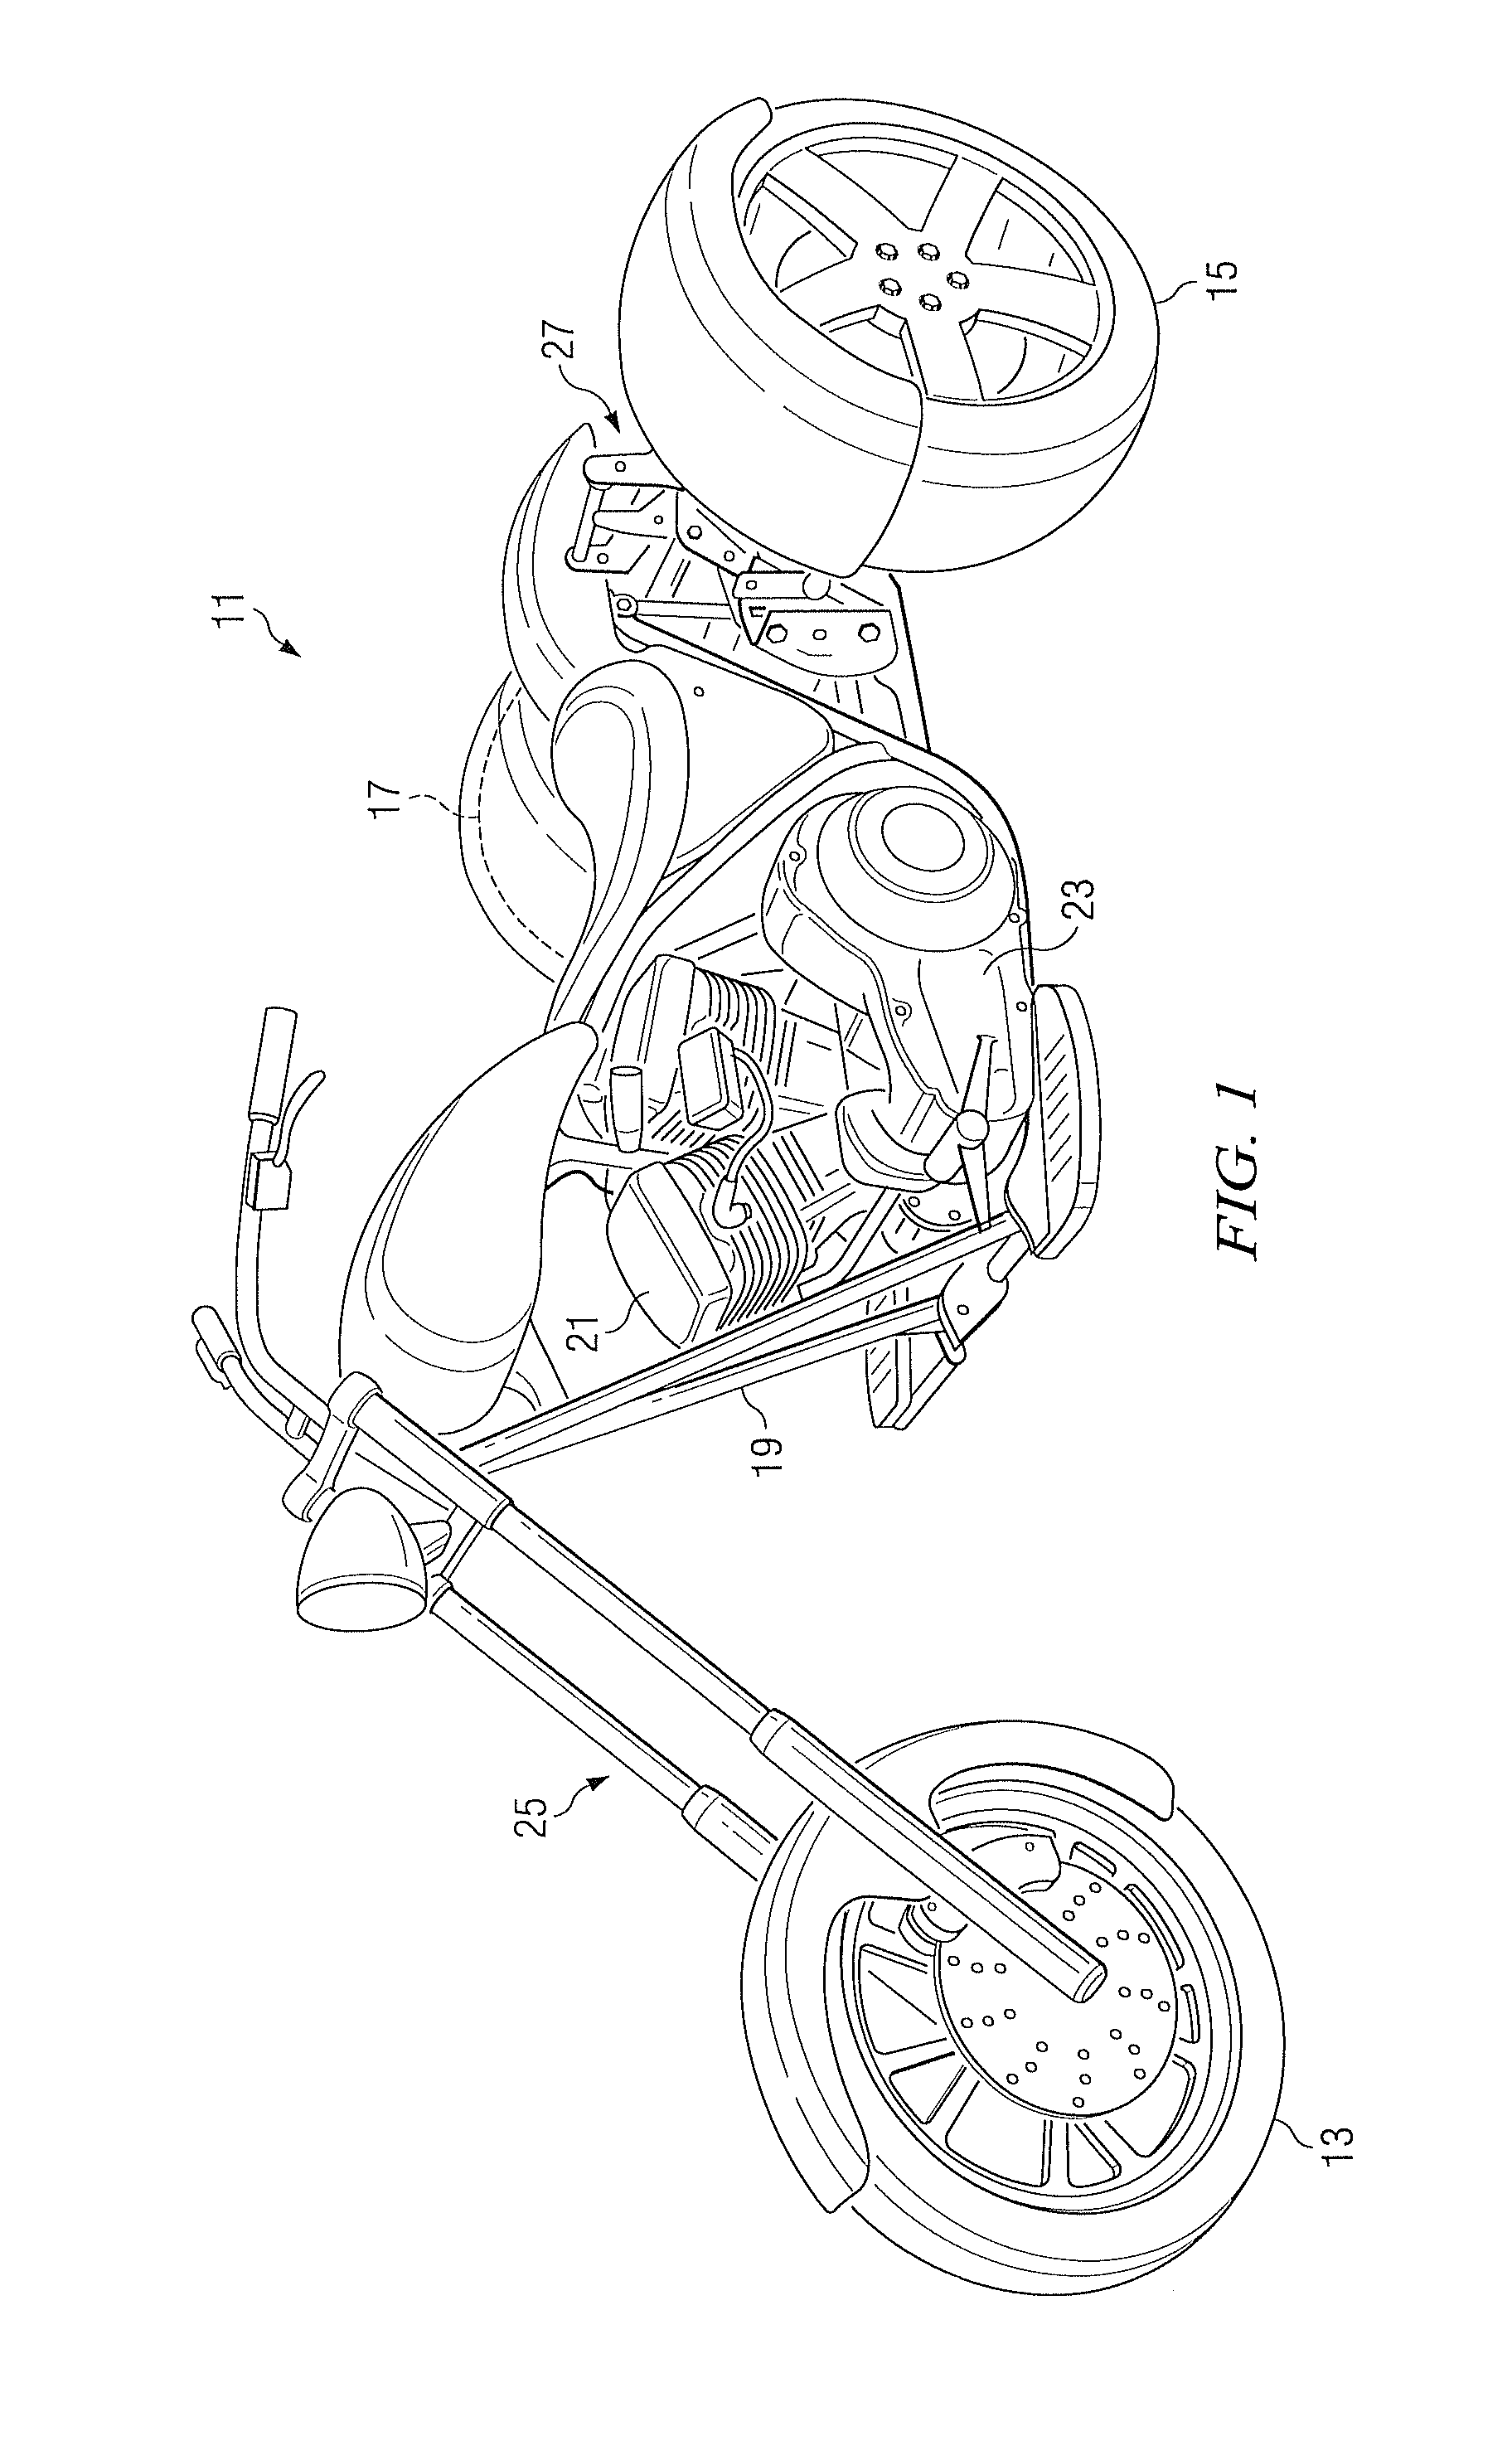 Tilting independent suspension system for motorcycle trike